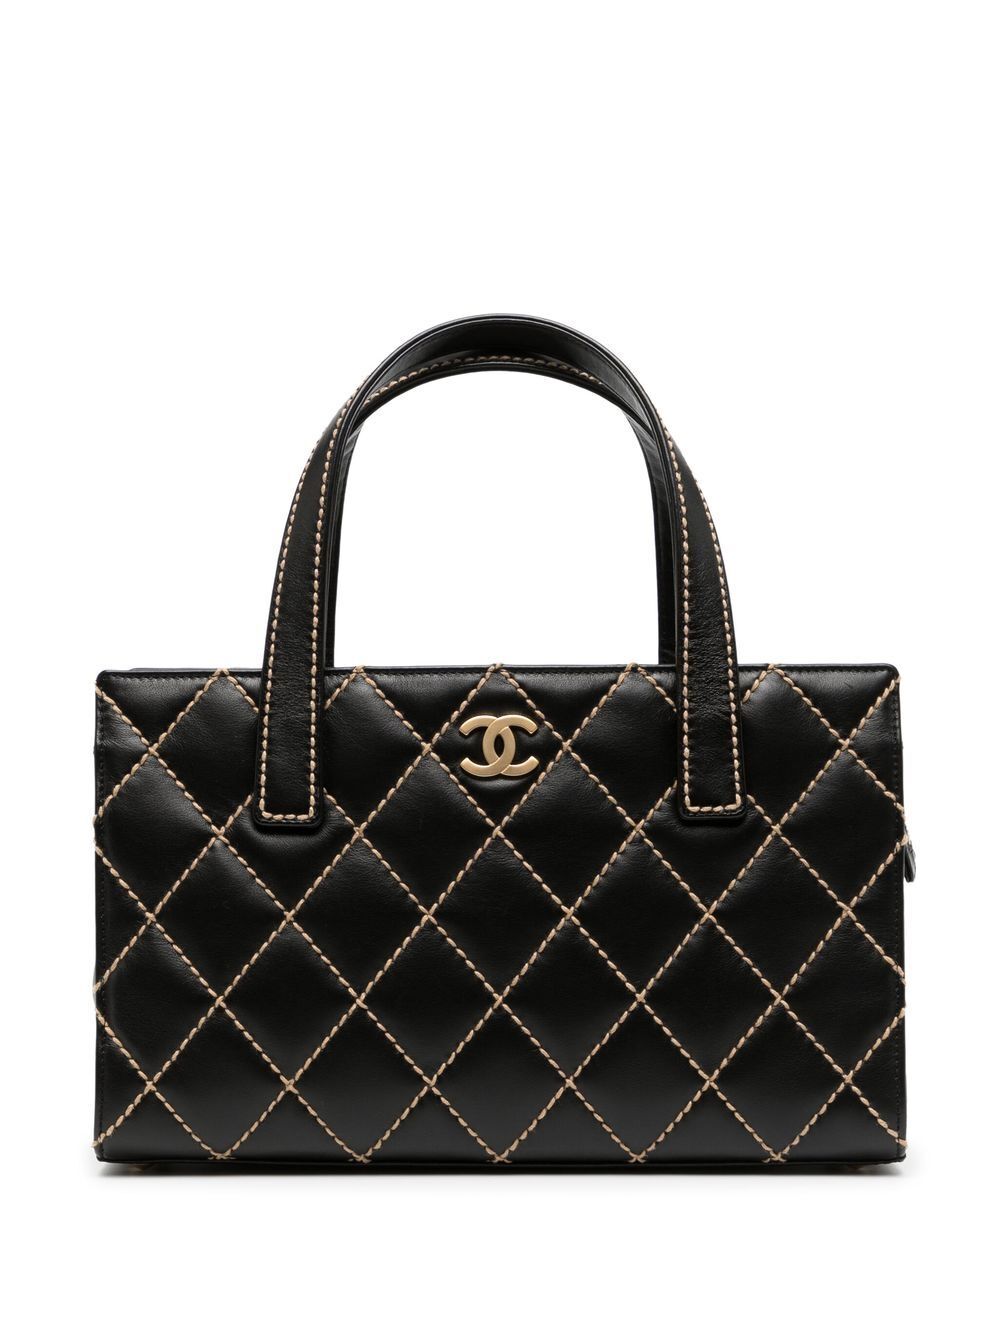 Chanel Pre-Owned 2005 Wild Stitch handbag - Black